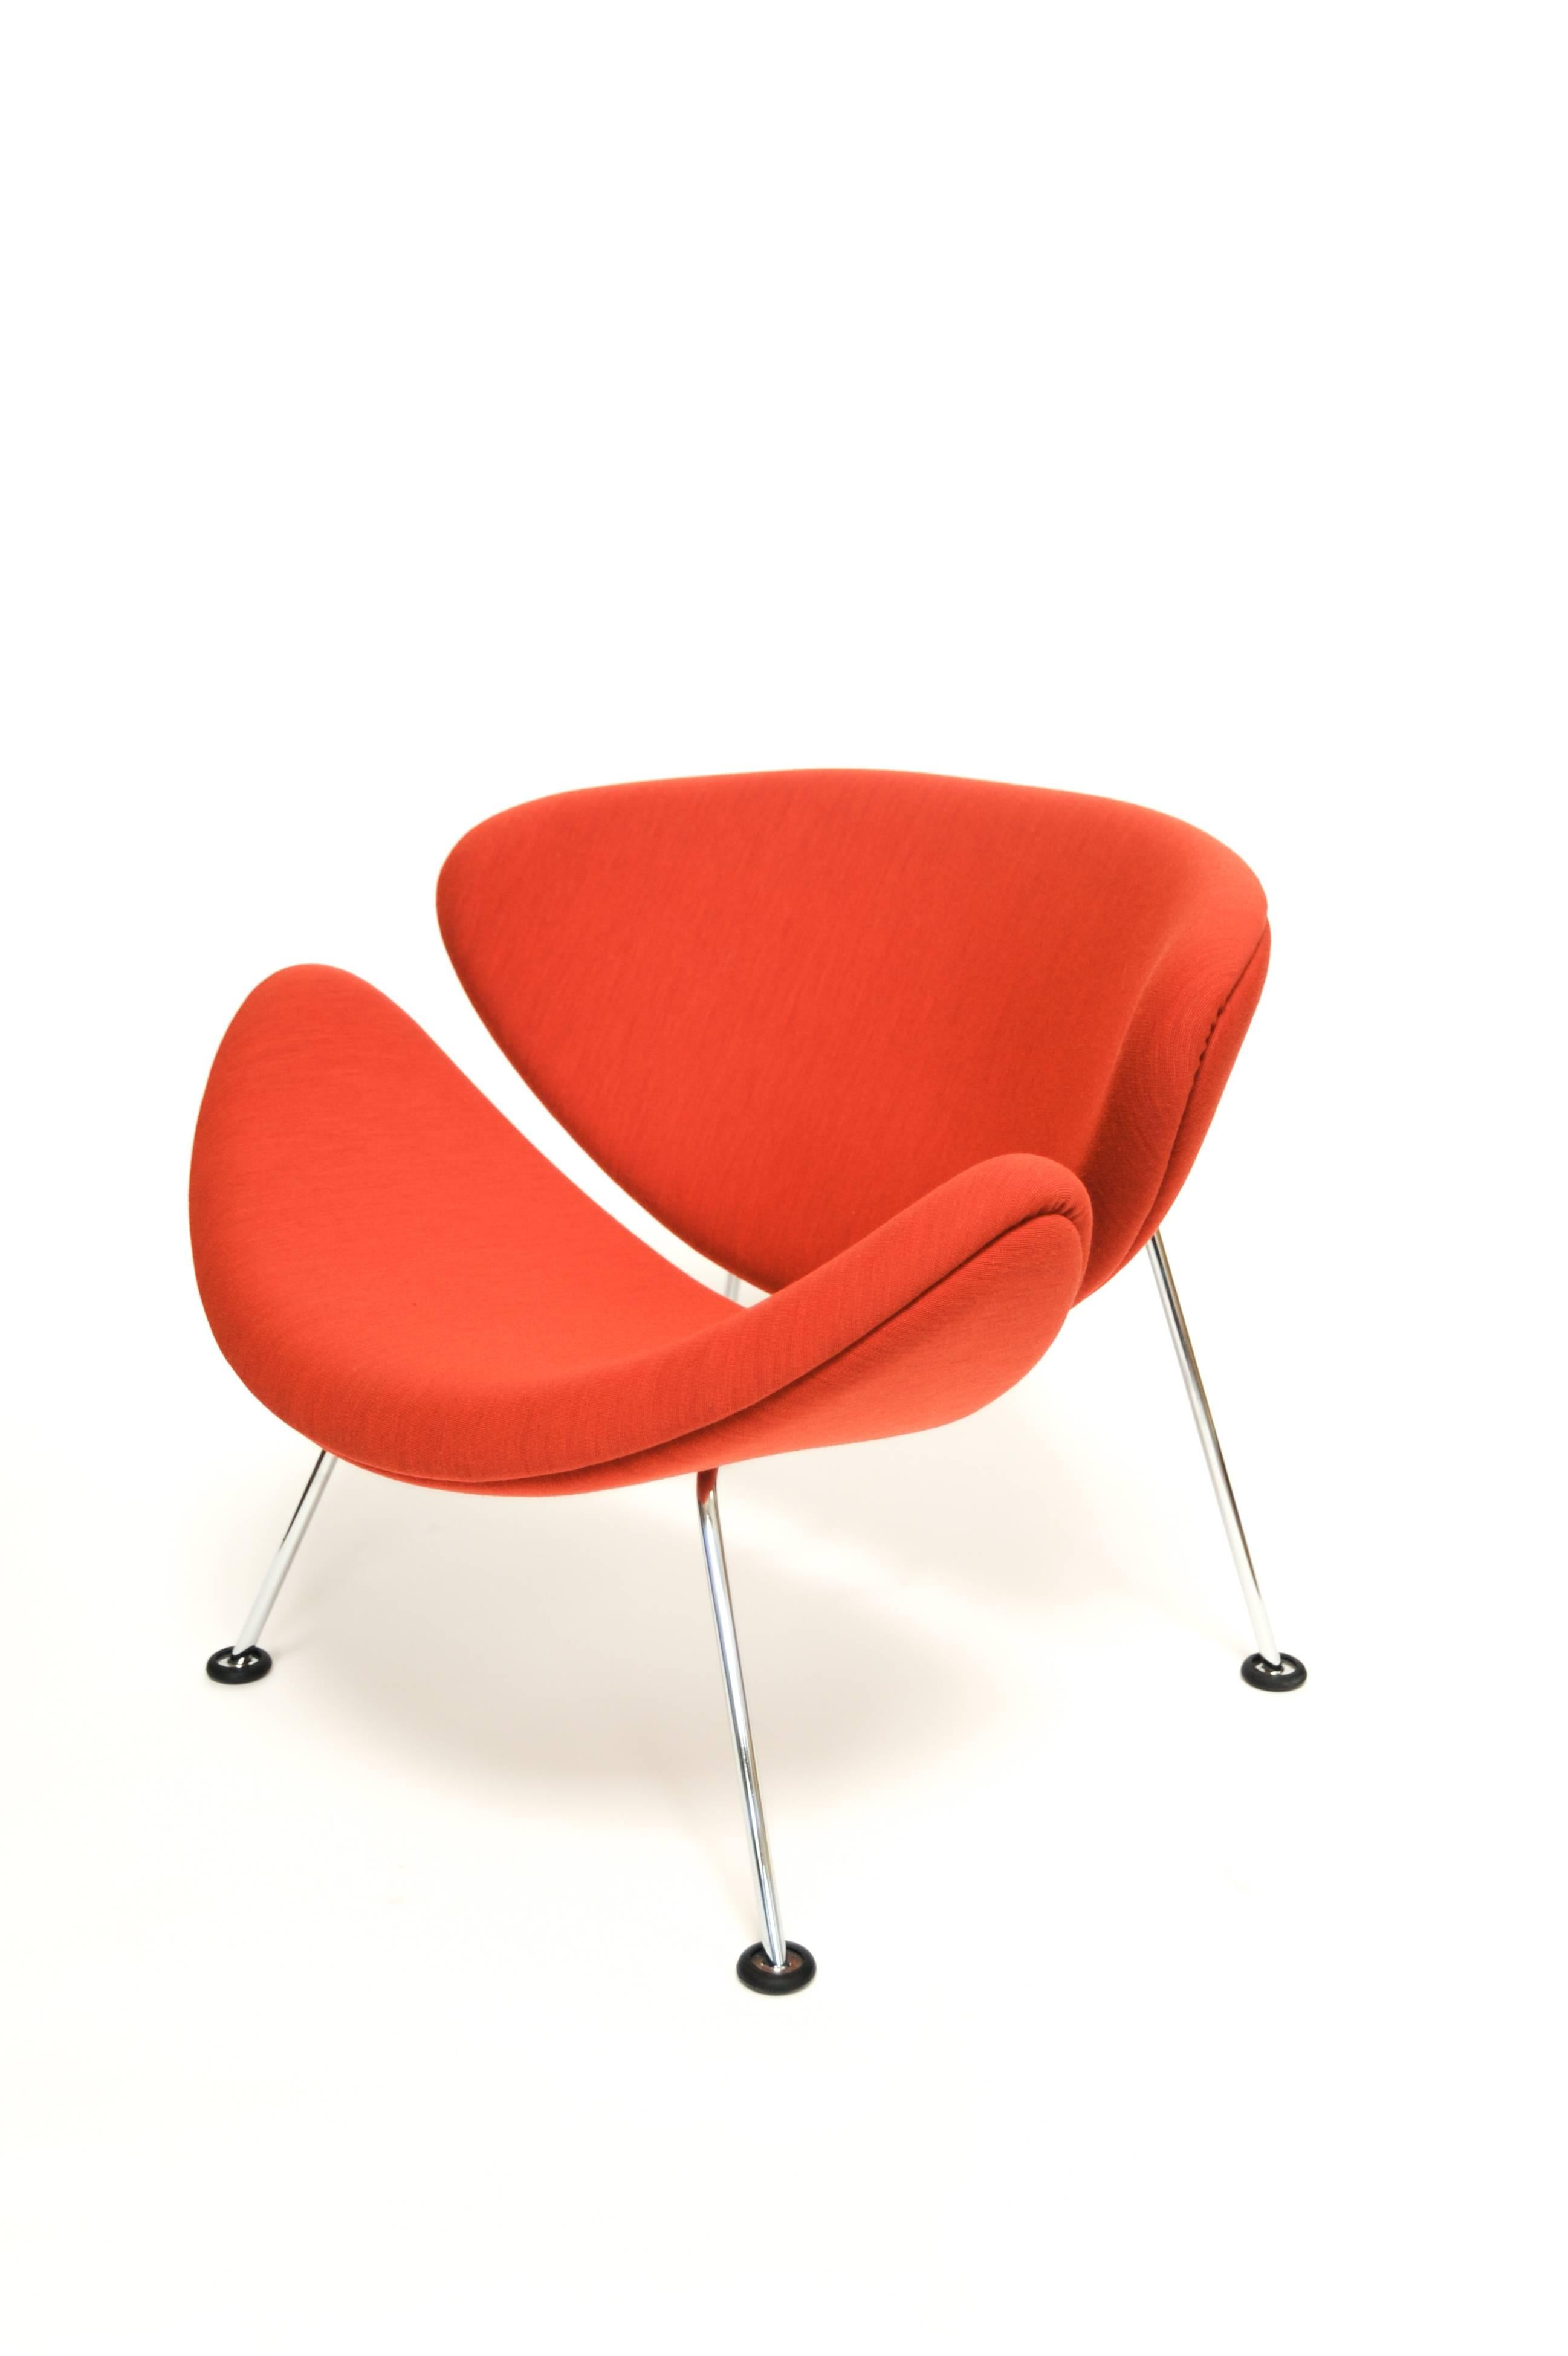 Orange Slice Jr Chair by Pierre Paulin in Kvadrat Artifort Selecte, Netherlands

Produced by Artifort, Netherlands, 2017
Measures: H 21.25 in, W 24.5 in, D 24.5 in (seat H 12.25 in)
Fabric: Kvadrat Artifort Selecte

Chair as shown: Febrik